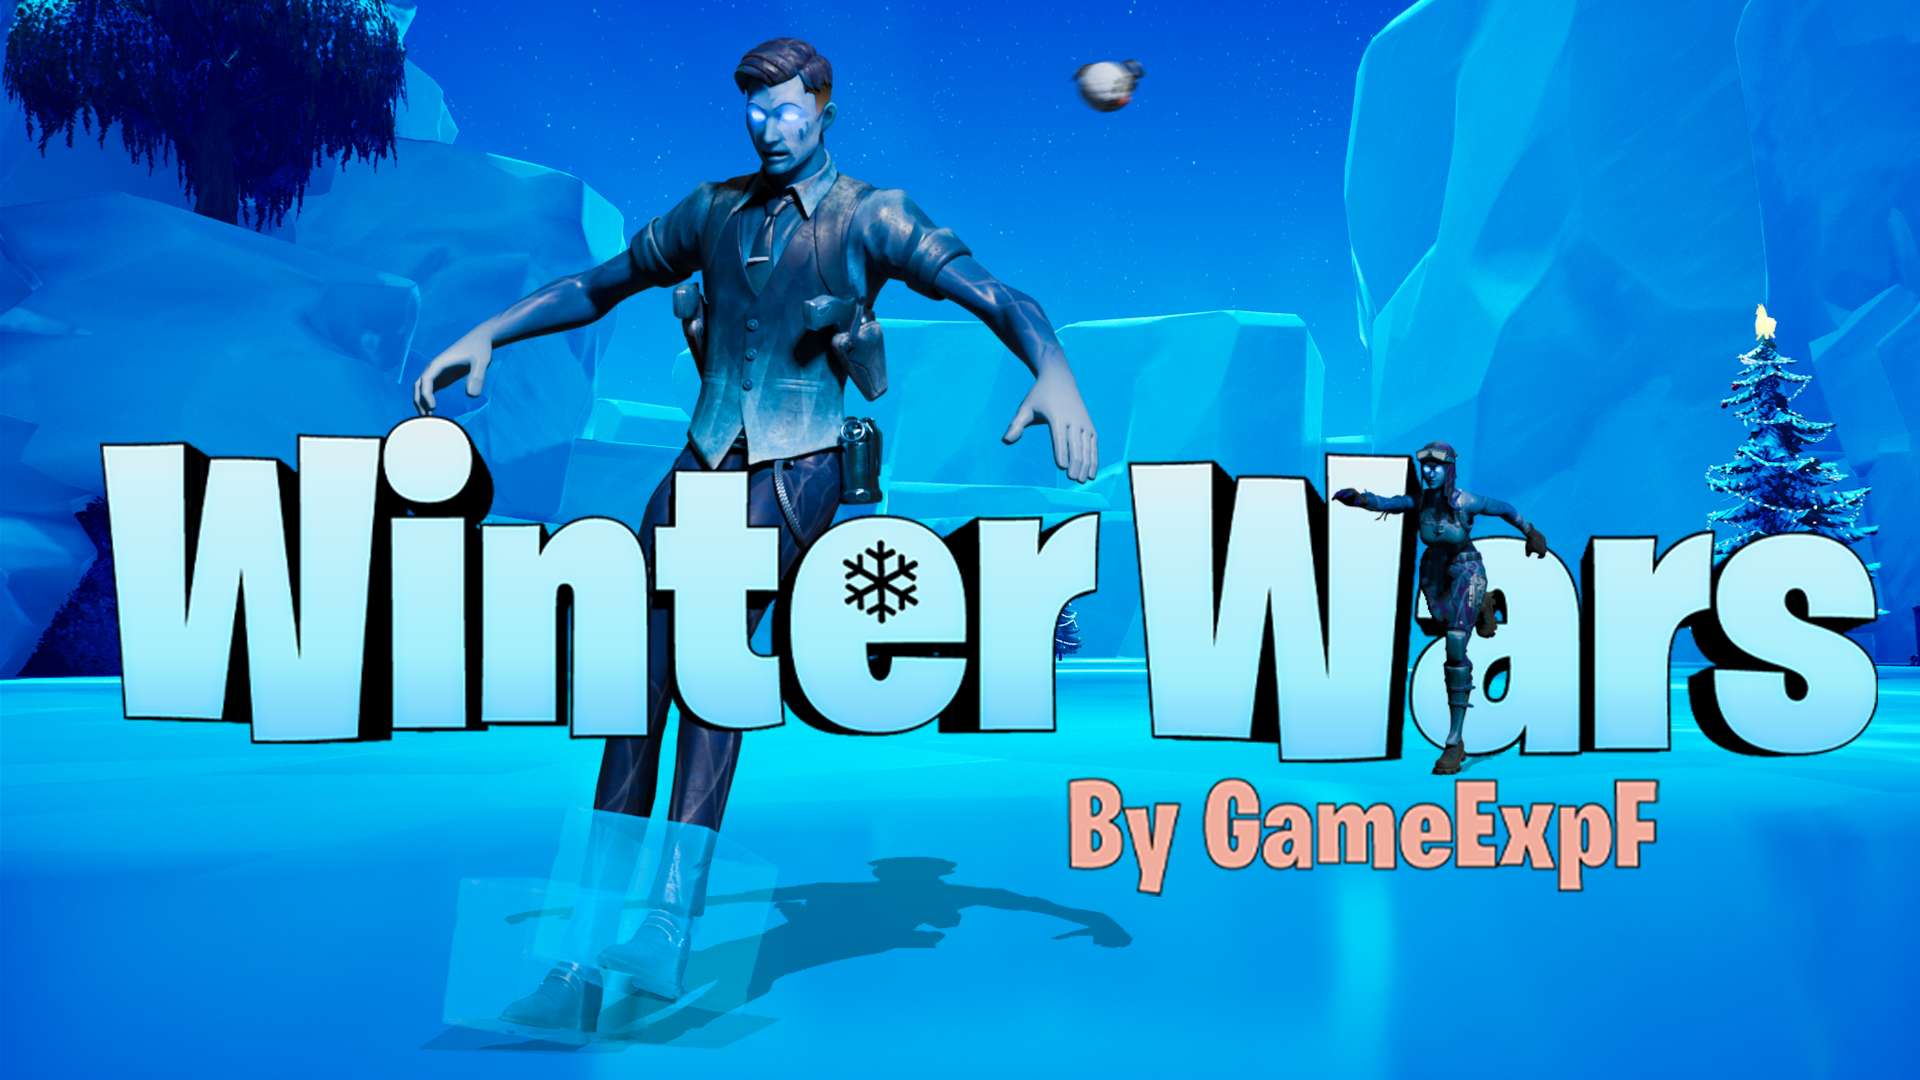 Winter Wars